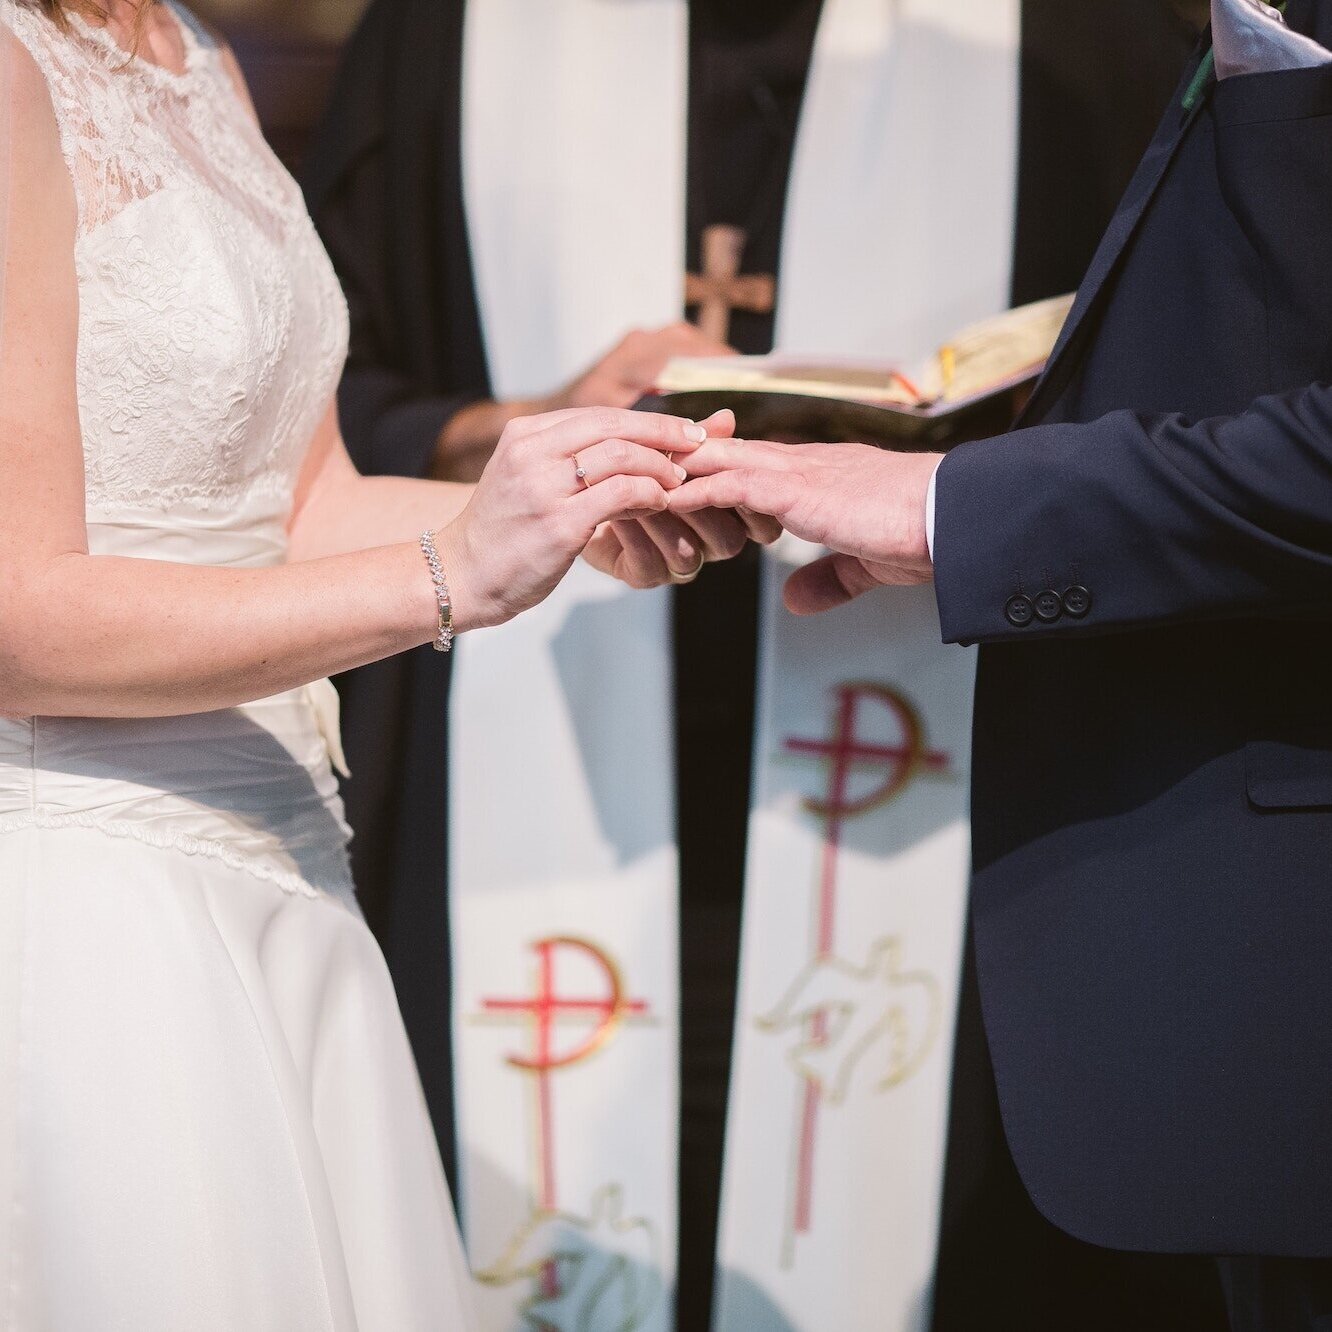 Sacrament of Matrimony